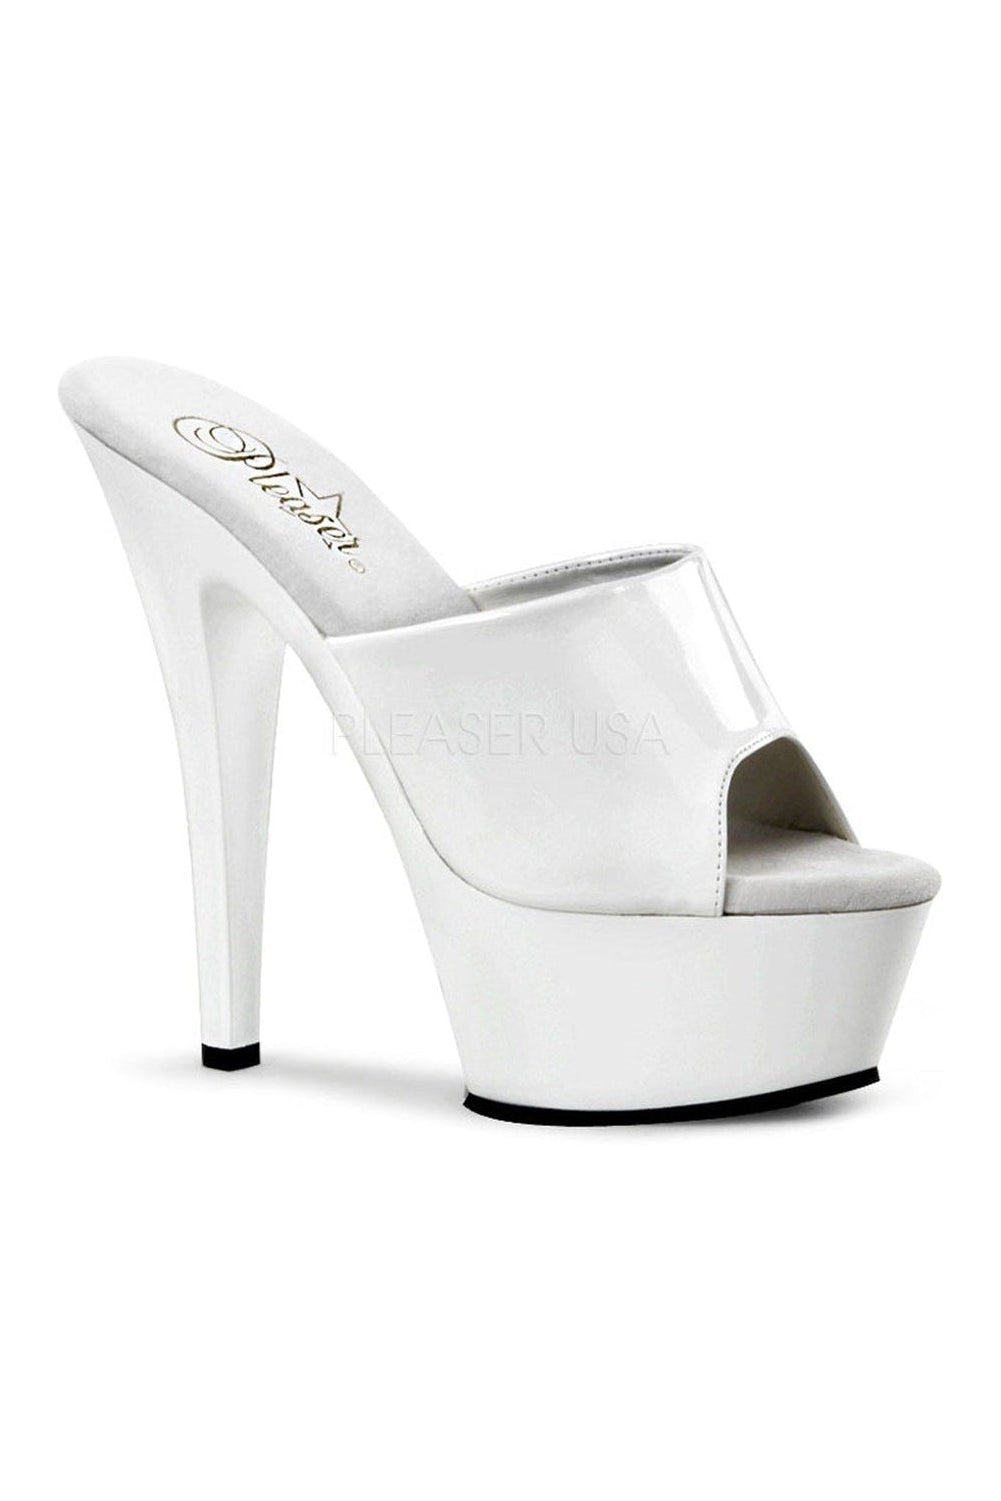 Pleaser White Slides Platform Stripper Shoes | Buy at Sexyshoes.com